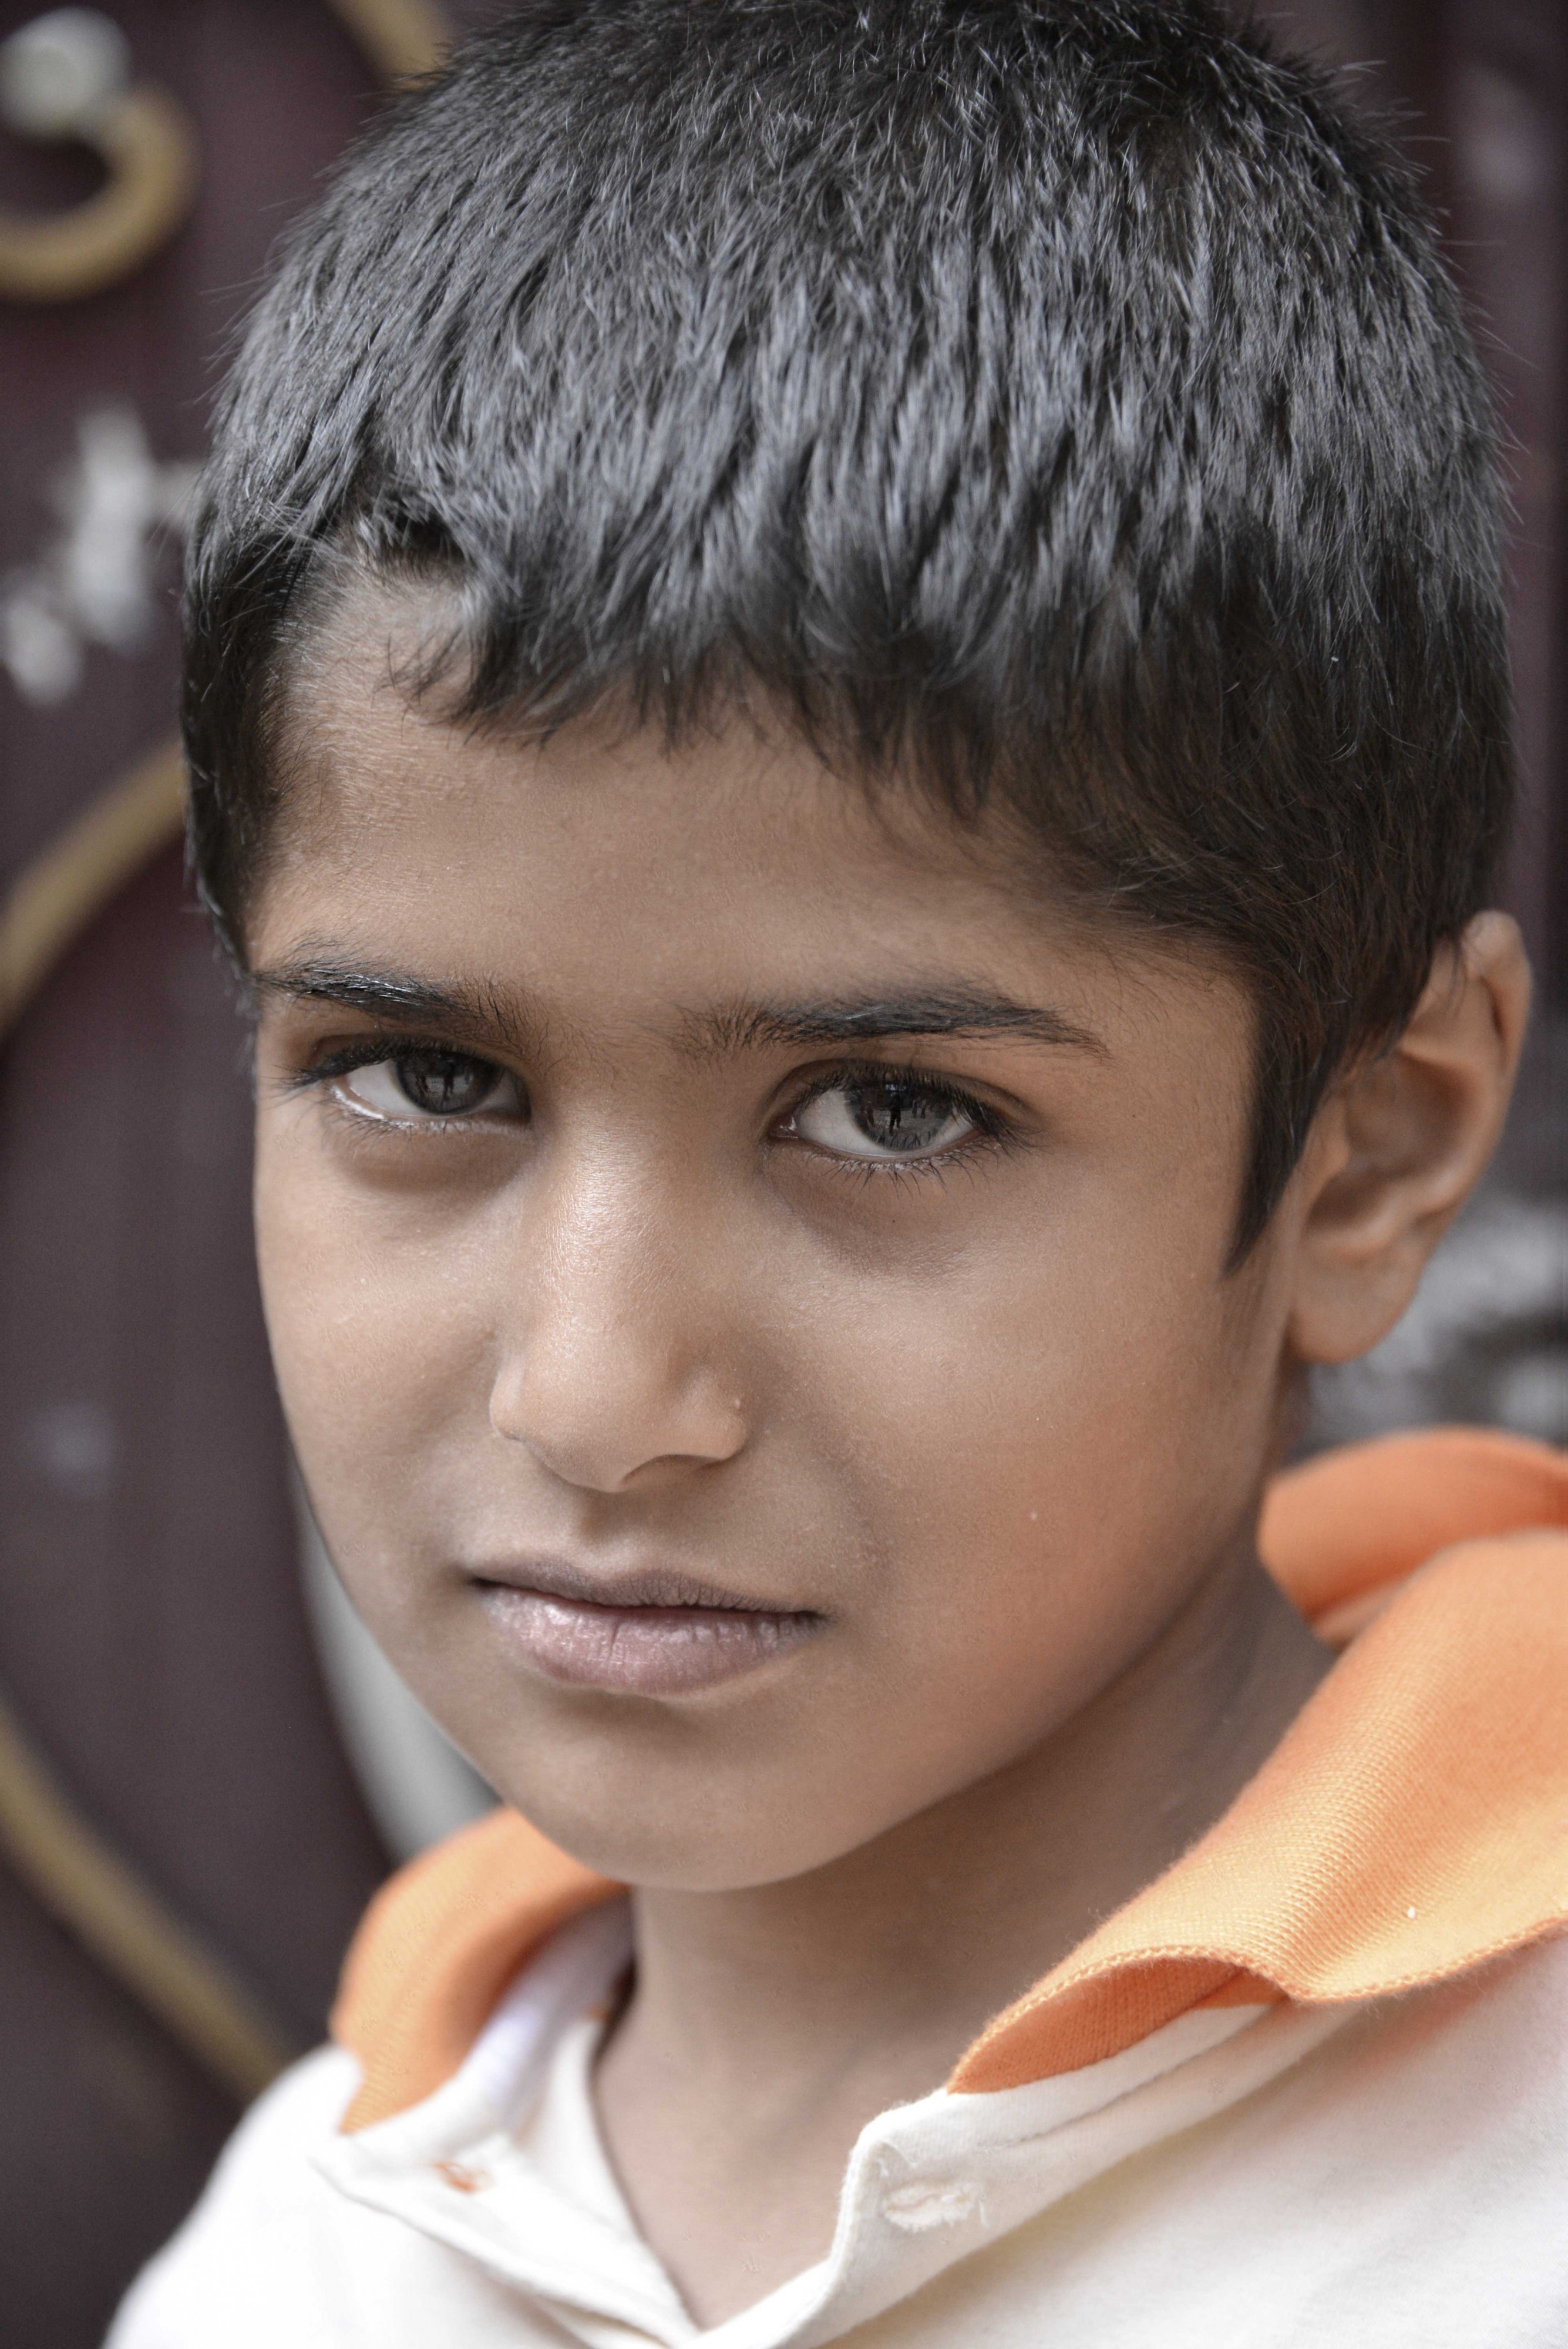 Sana'a Boy, Yemen (12285245516)